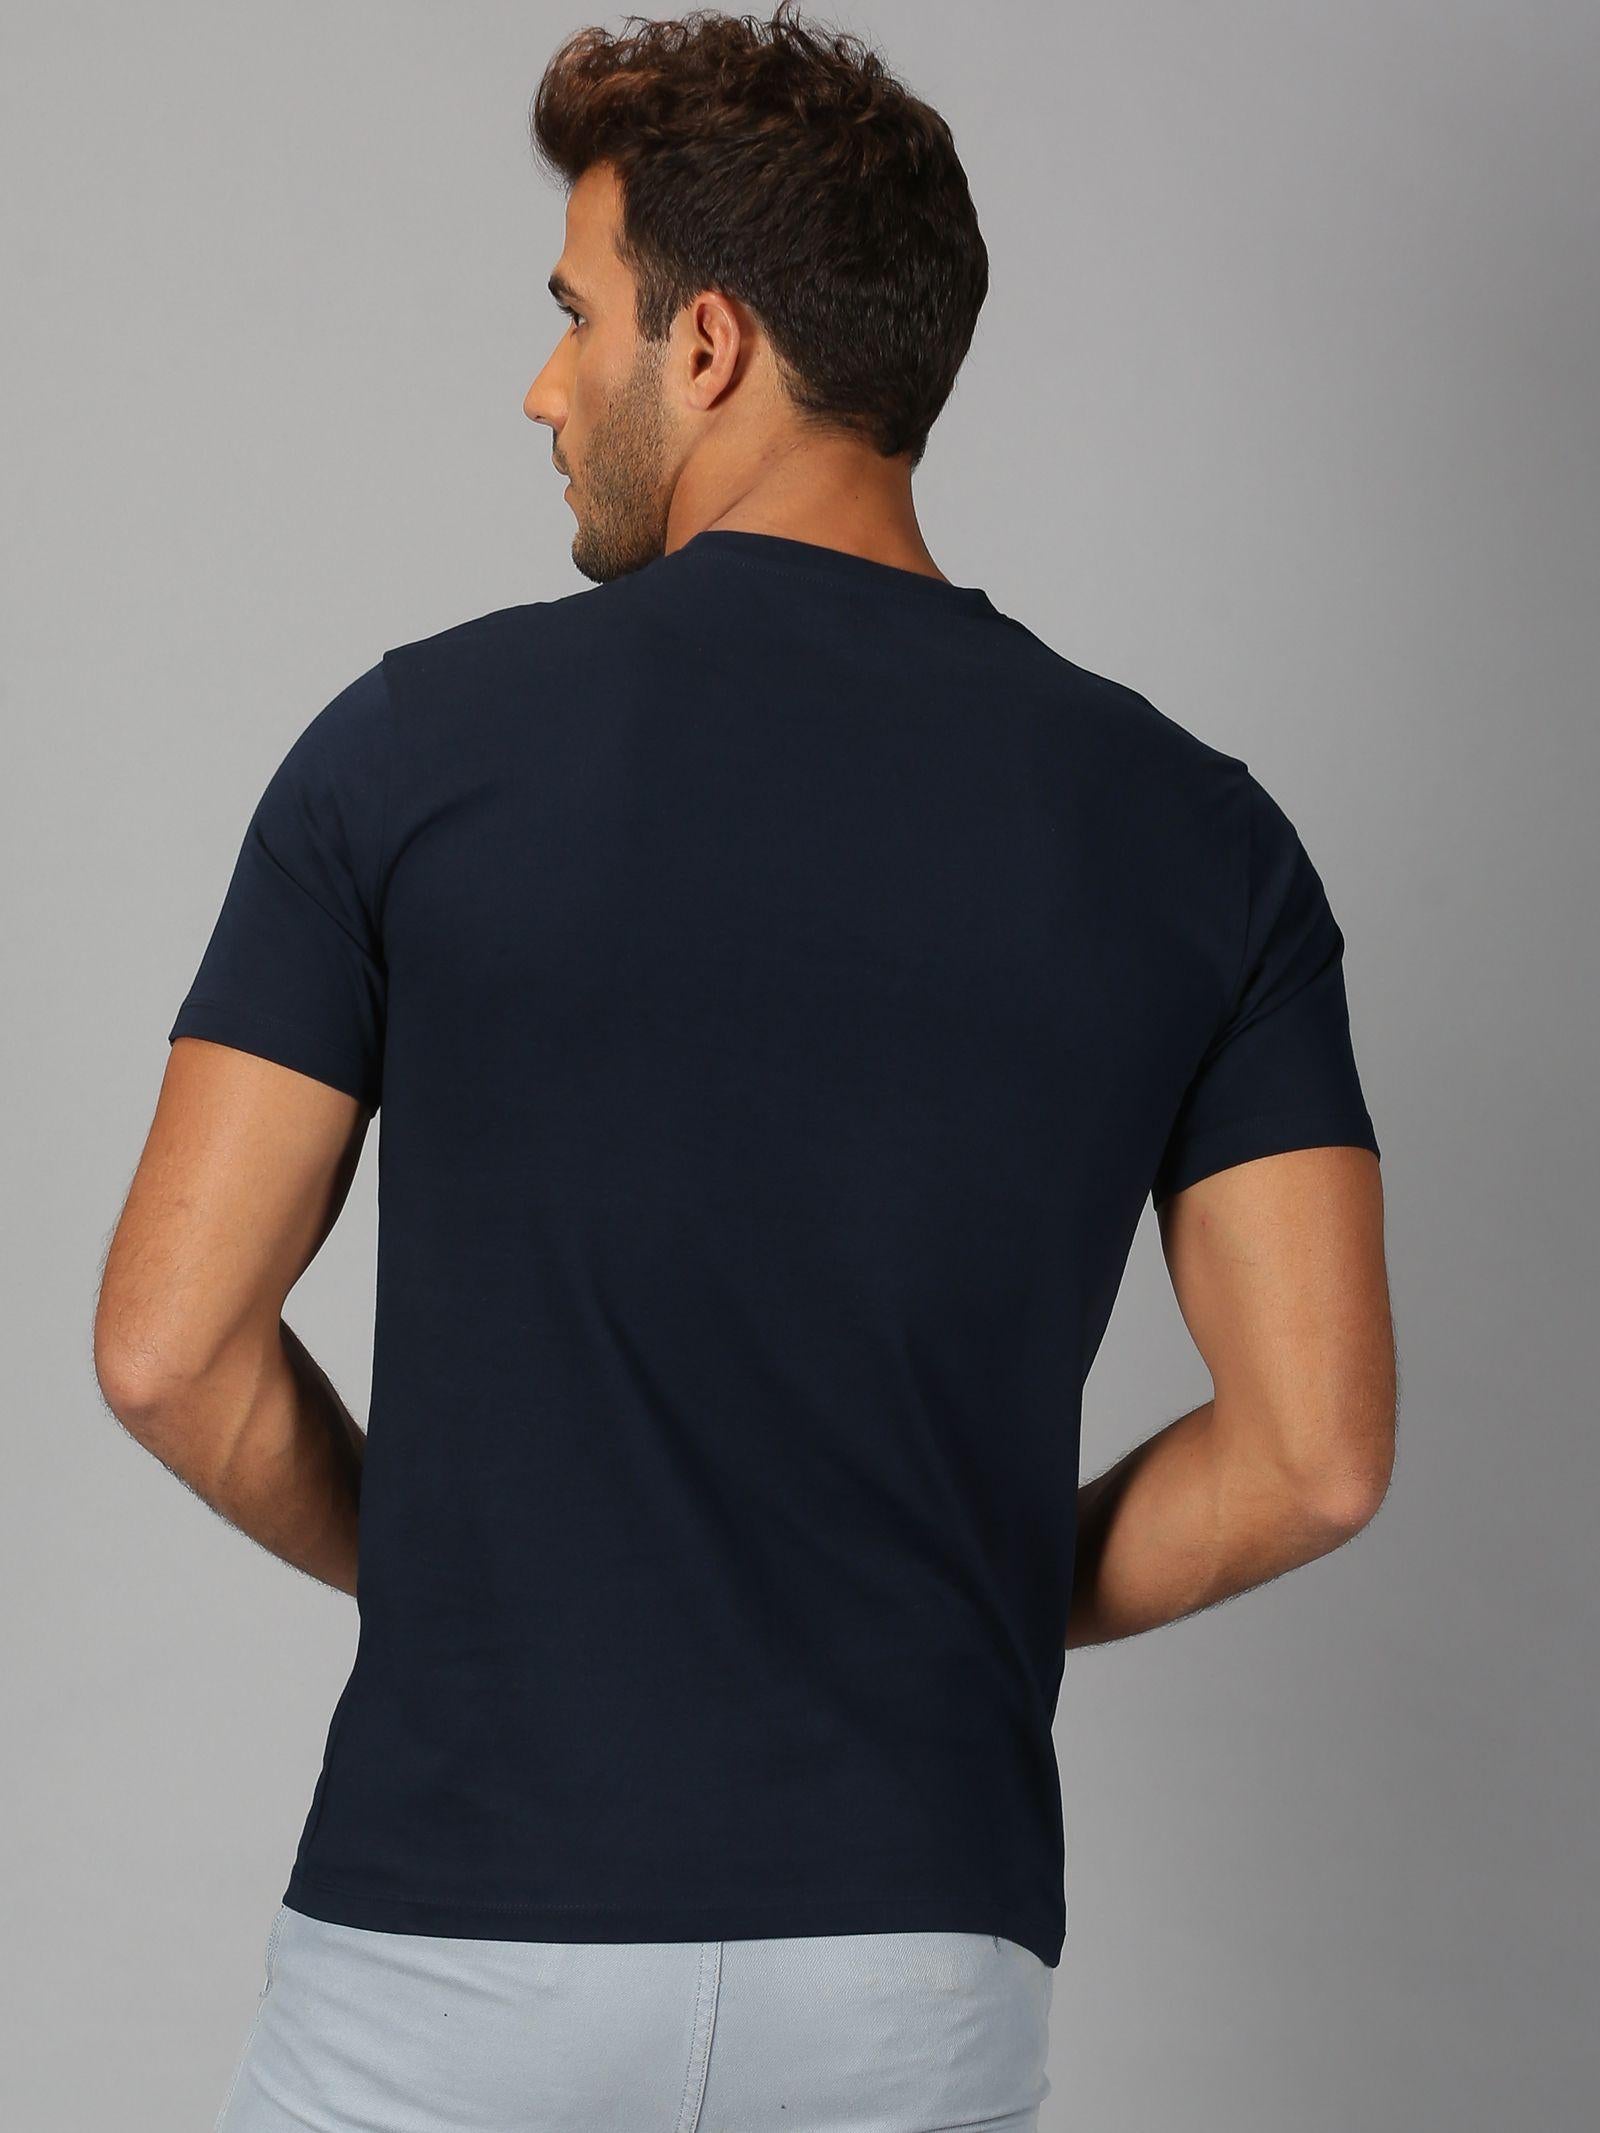 UrGear Cotton Graphics Half Sleeves Round Neck Mens T-Shirt